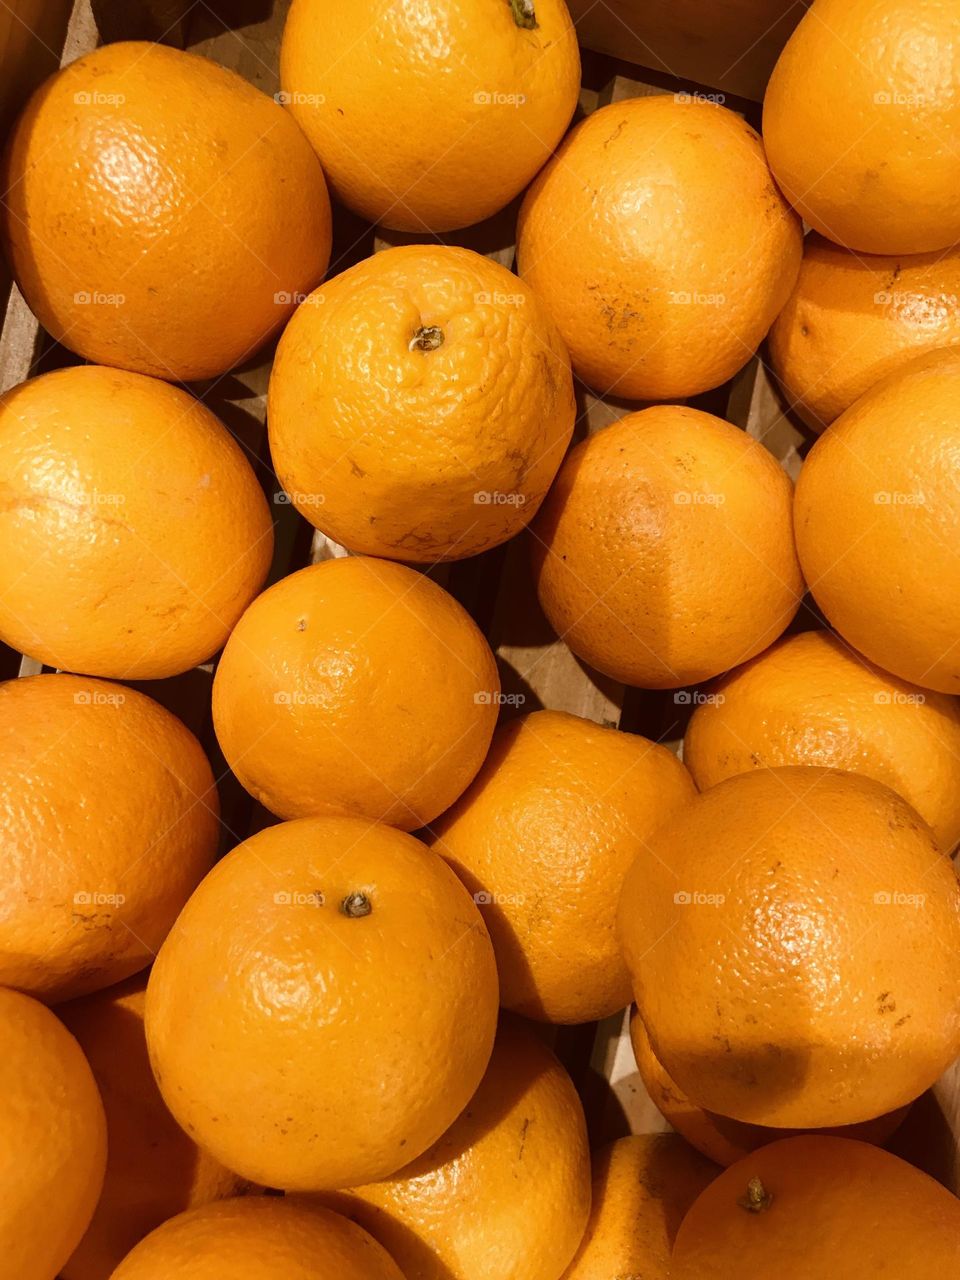 Food and Drink healthy eating food fruit Freshness wellbeing citrus fruit Citrus orange color abundance